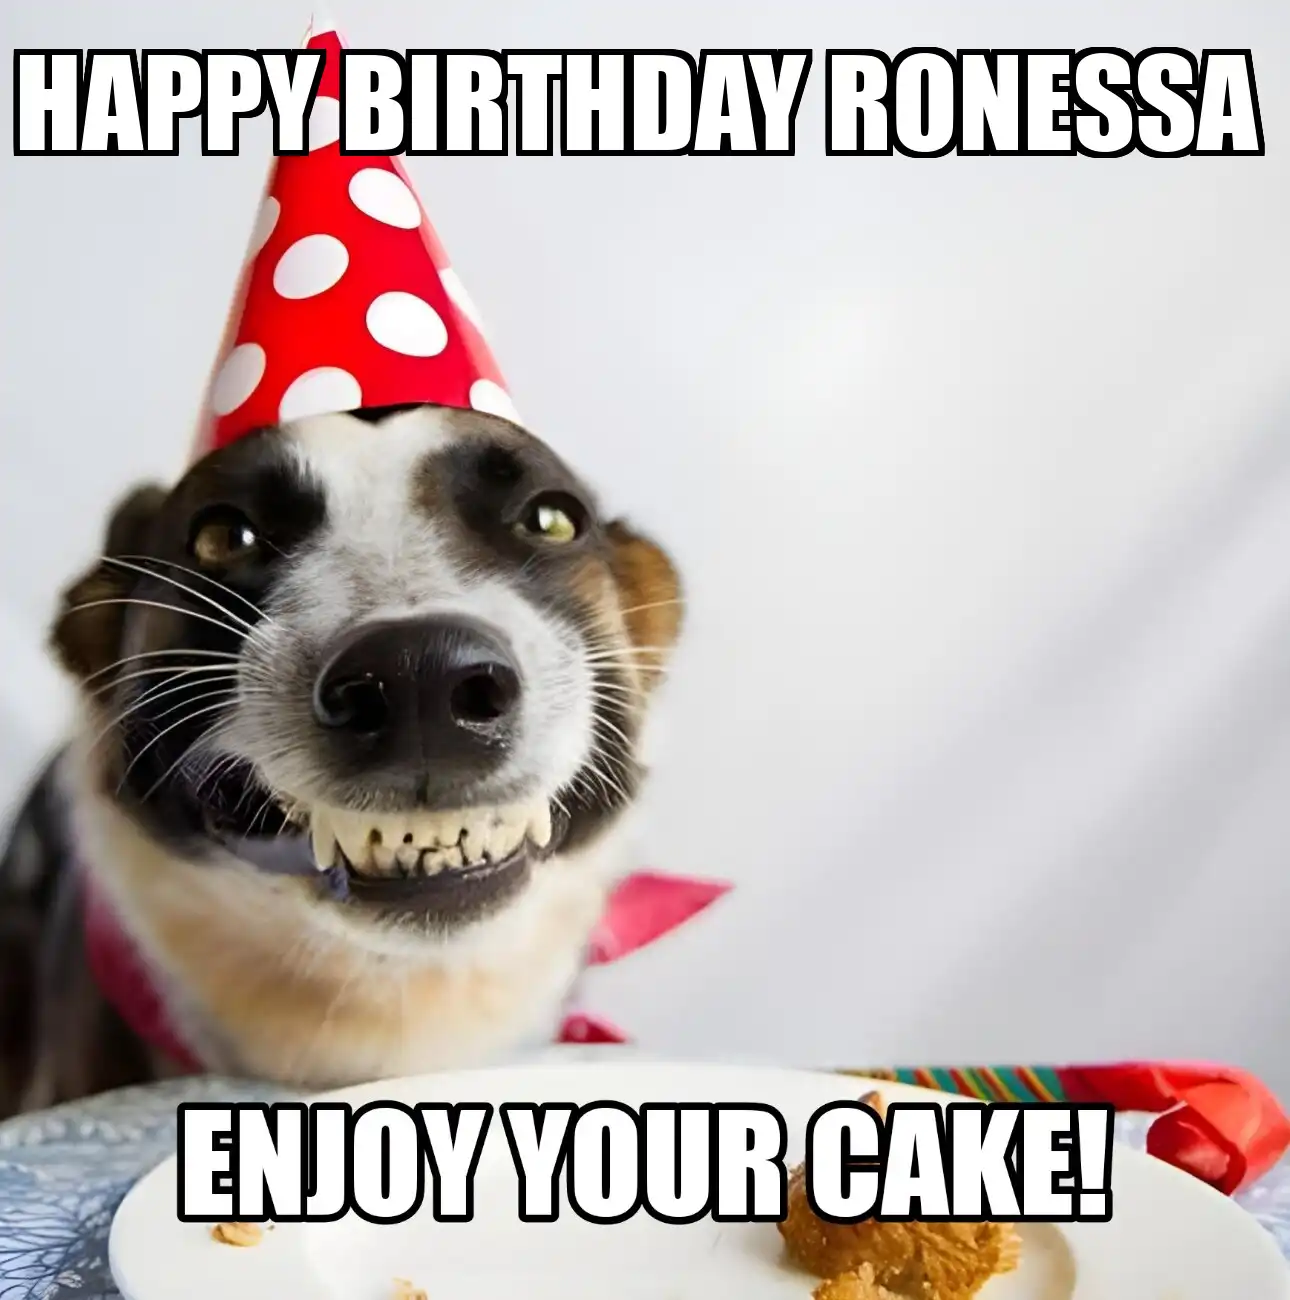 Happy Birthday Ronessa Enjoy Your Cake Dog Meme